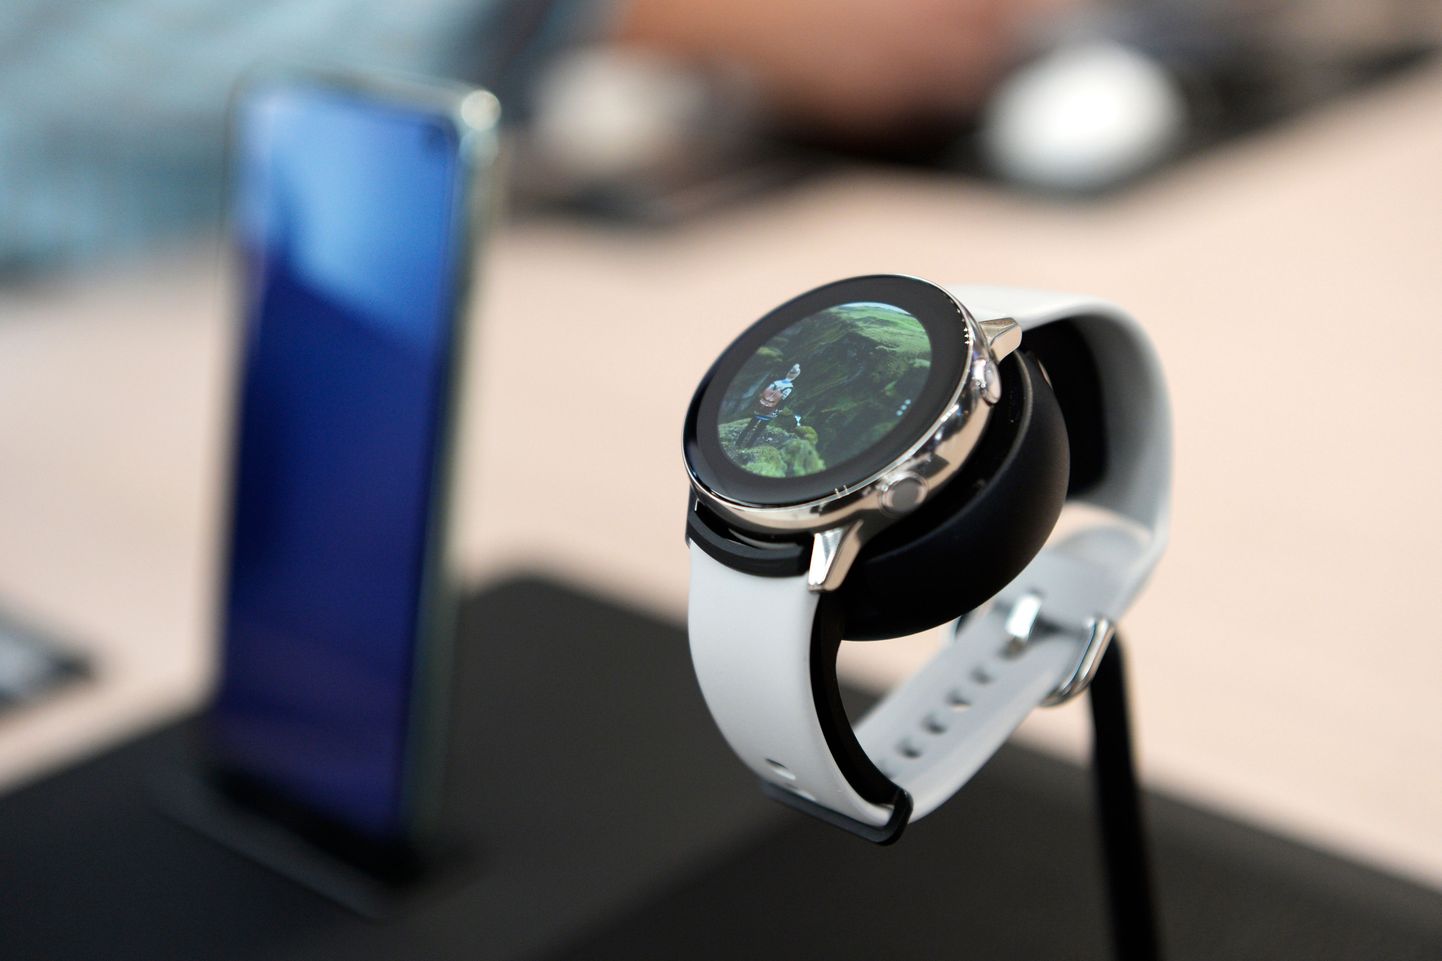 Samsung Galaxy Watch.